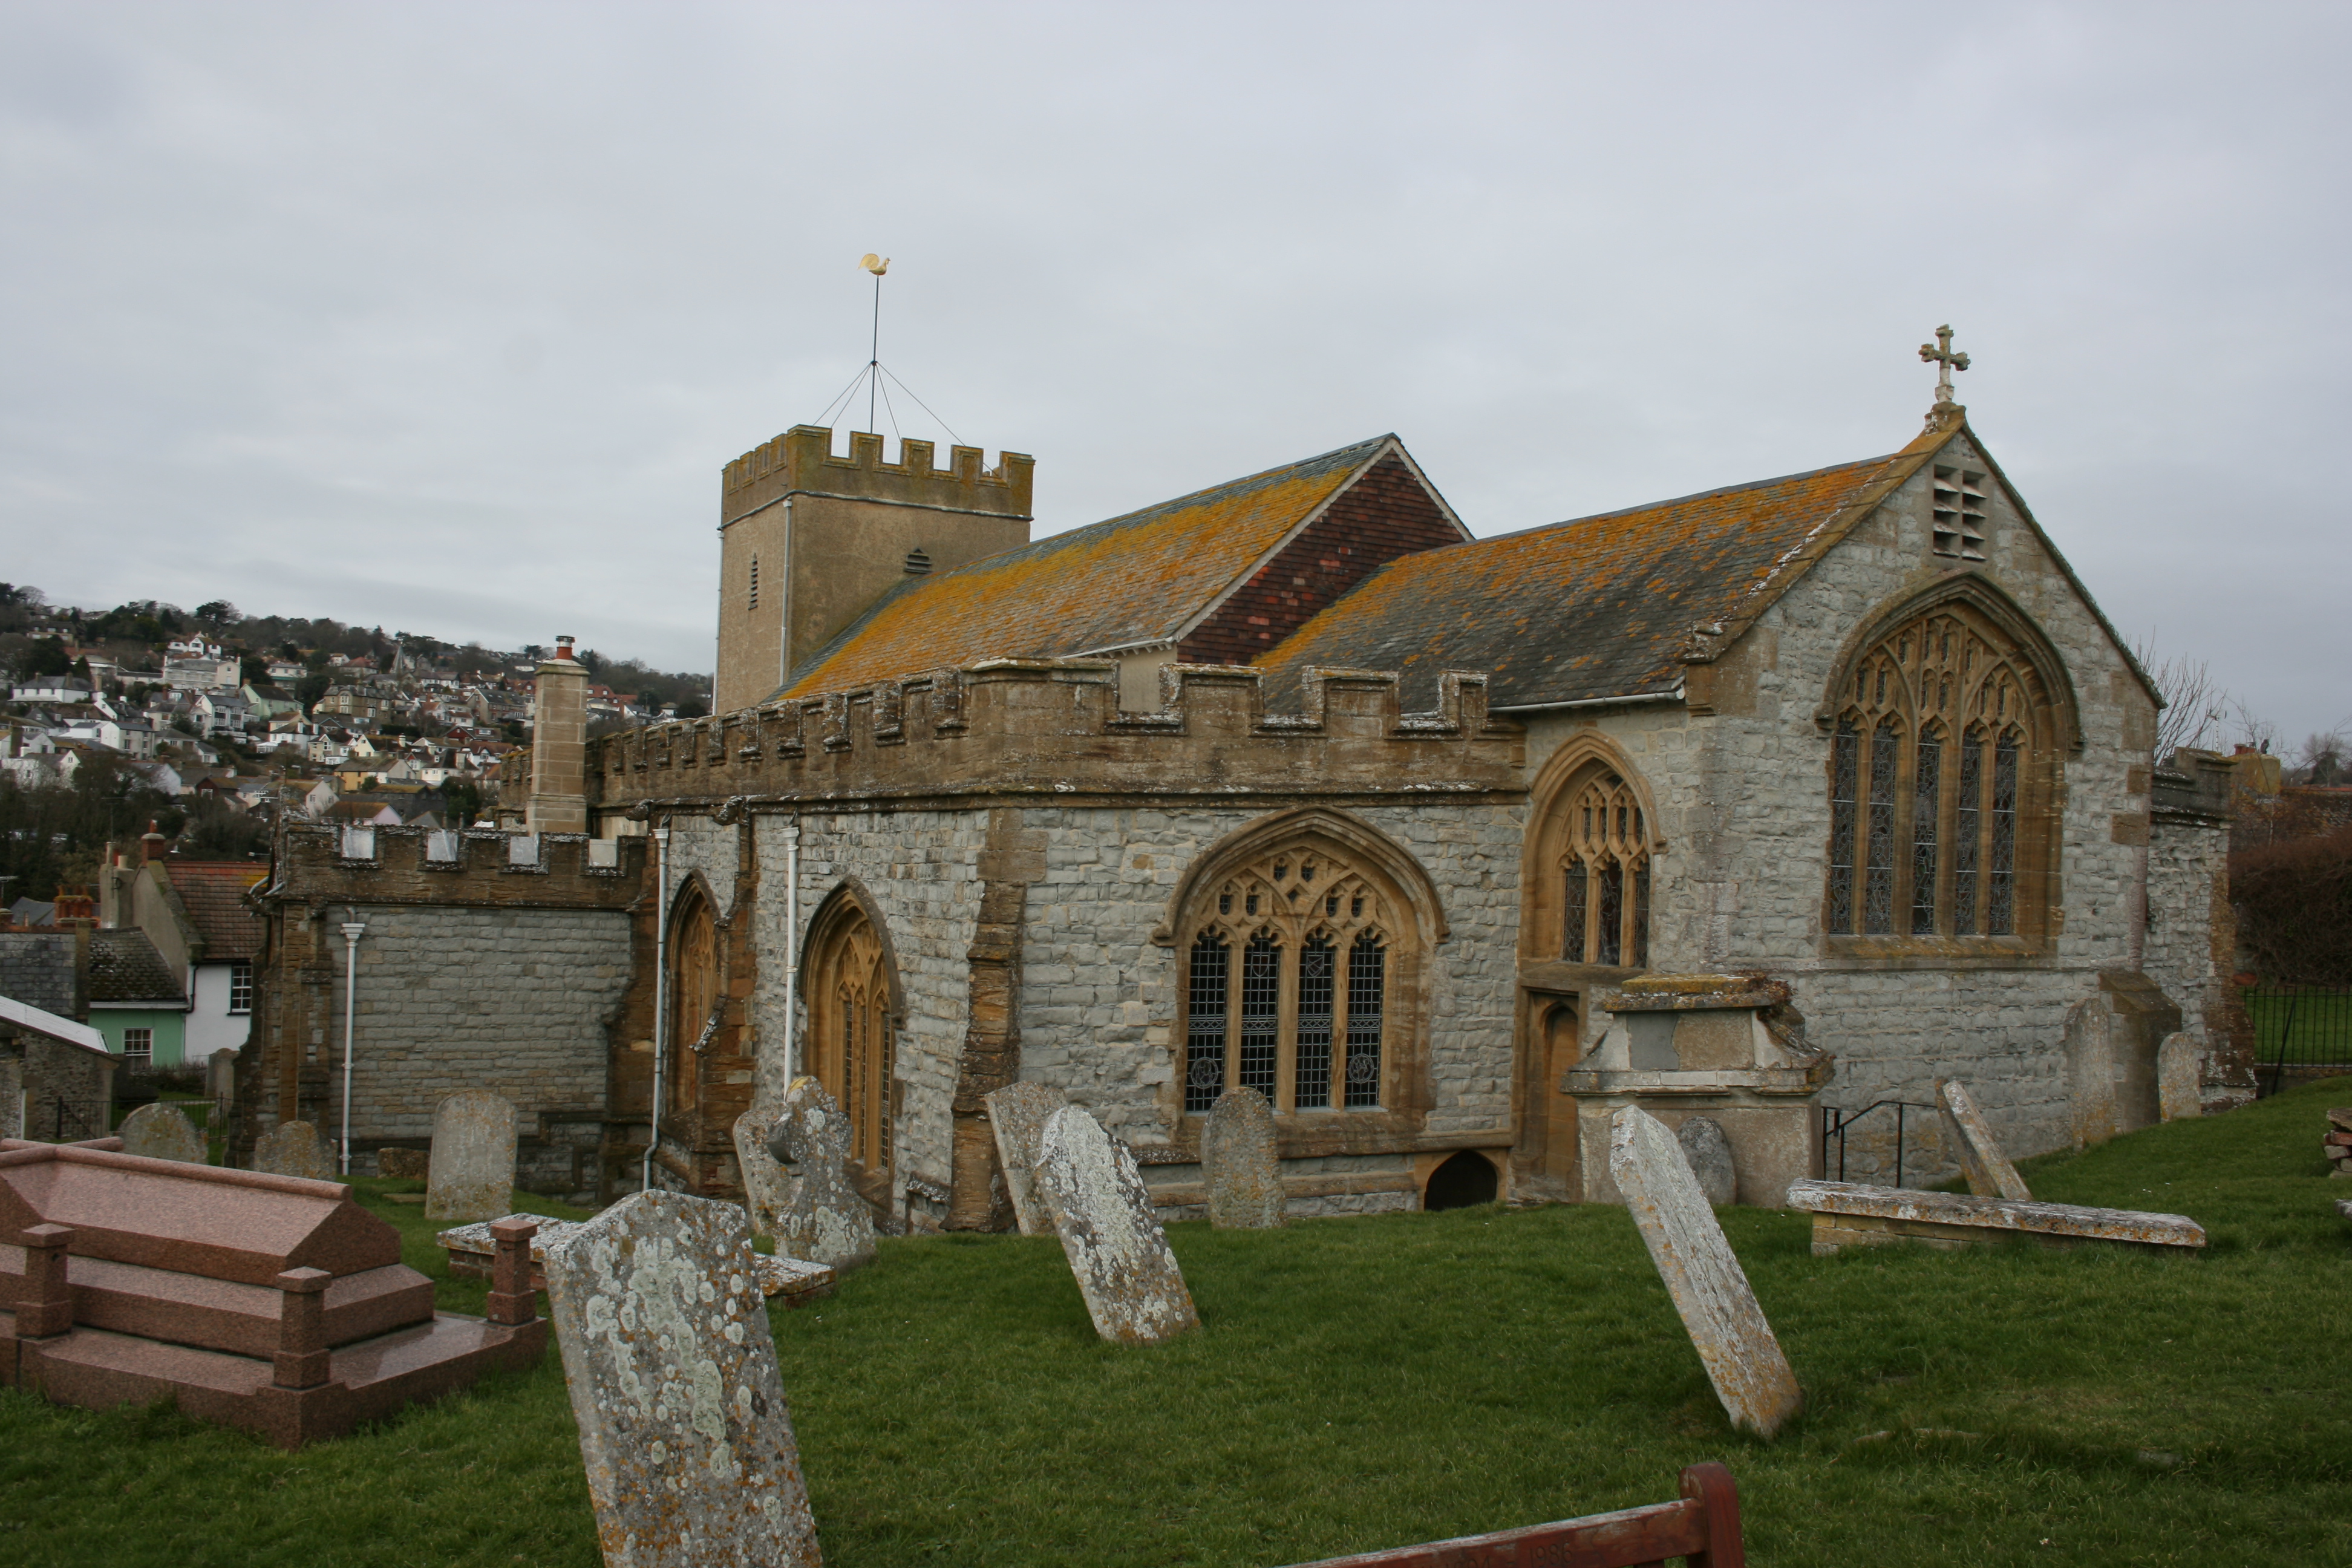 Lyme Regis church